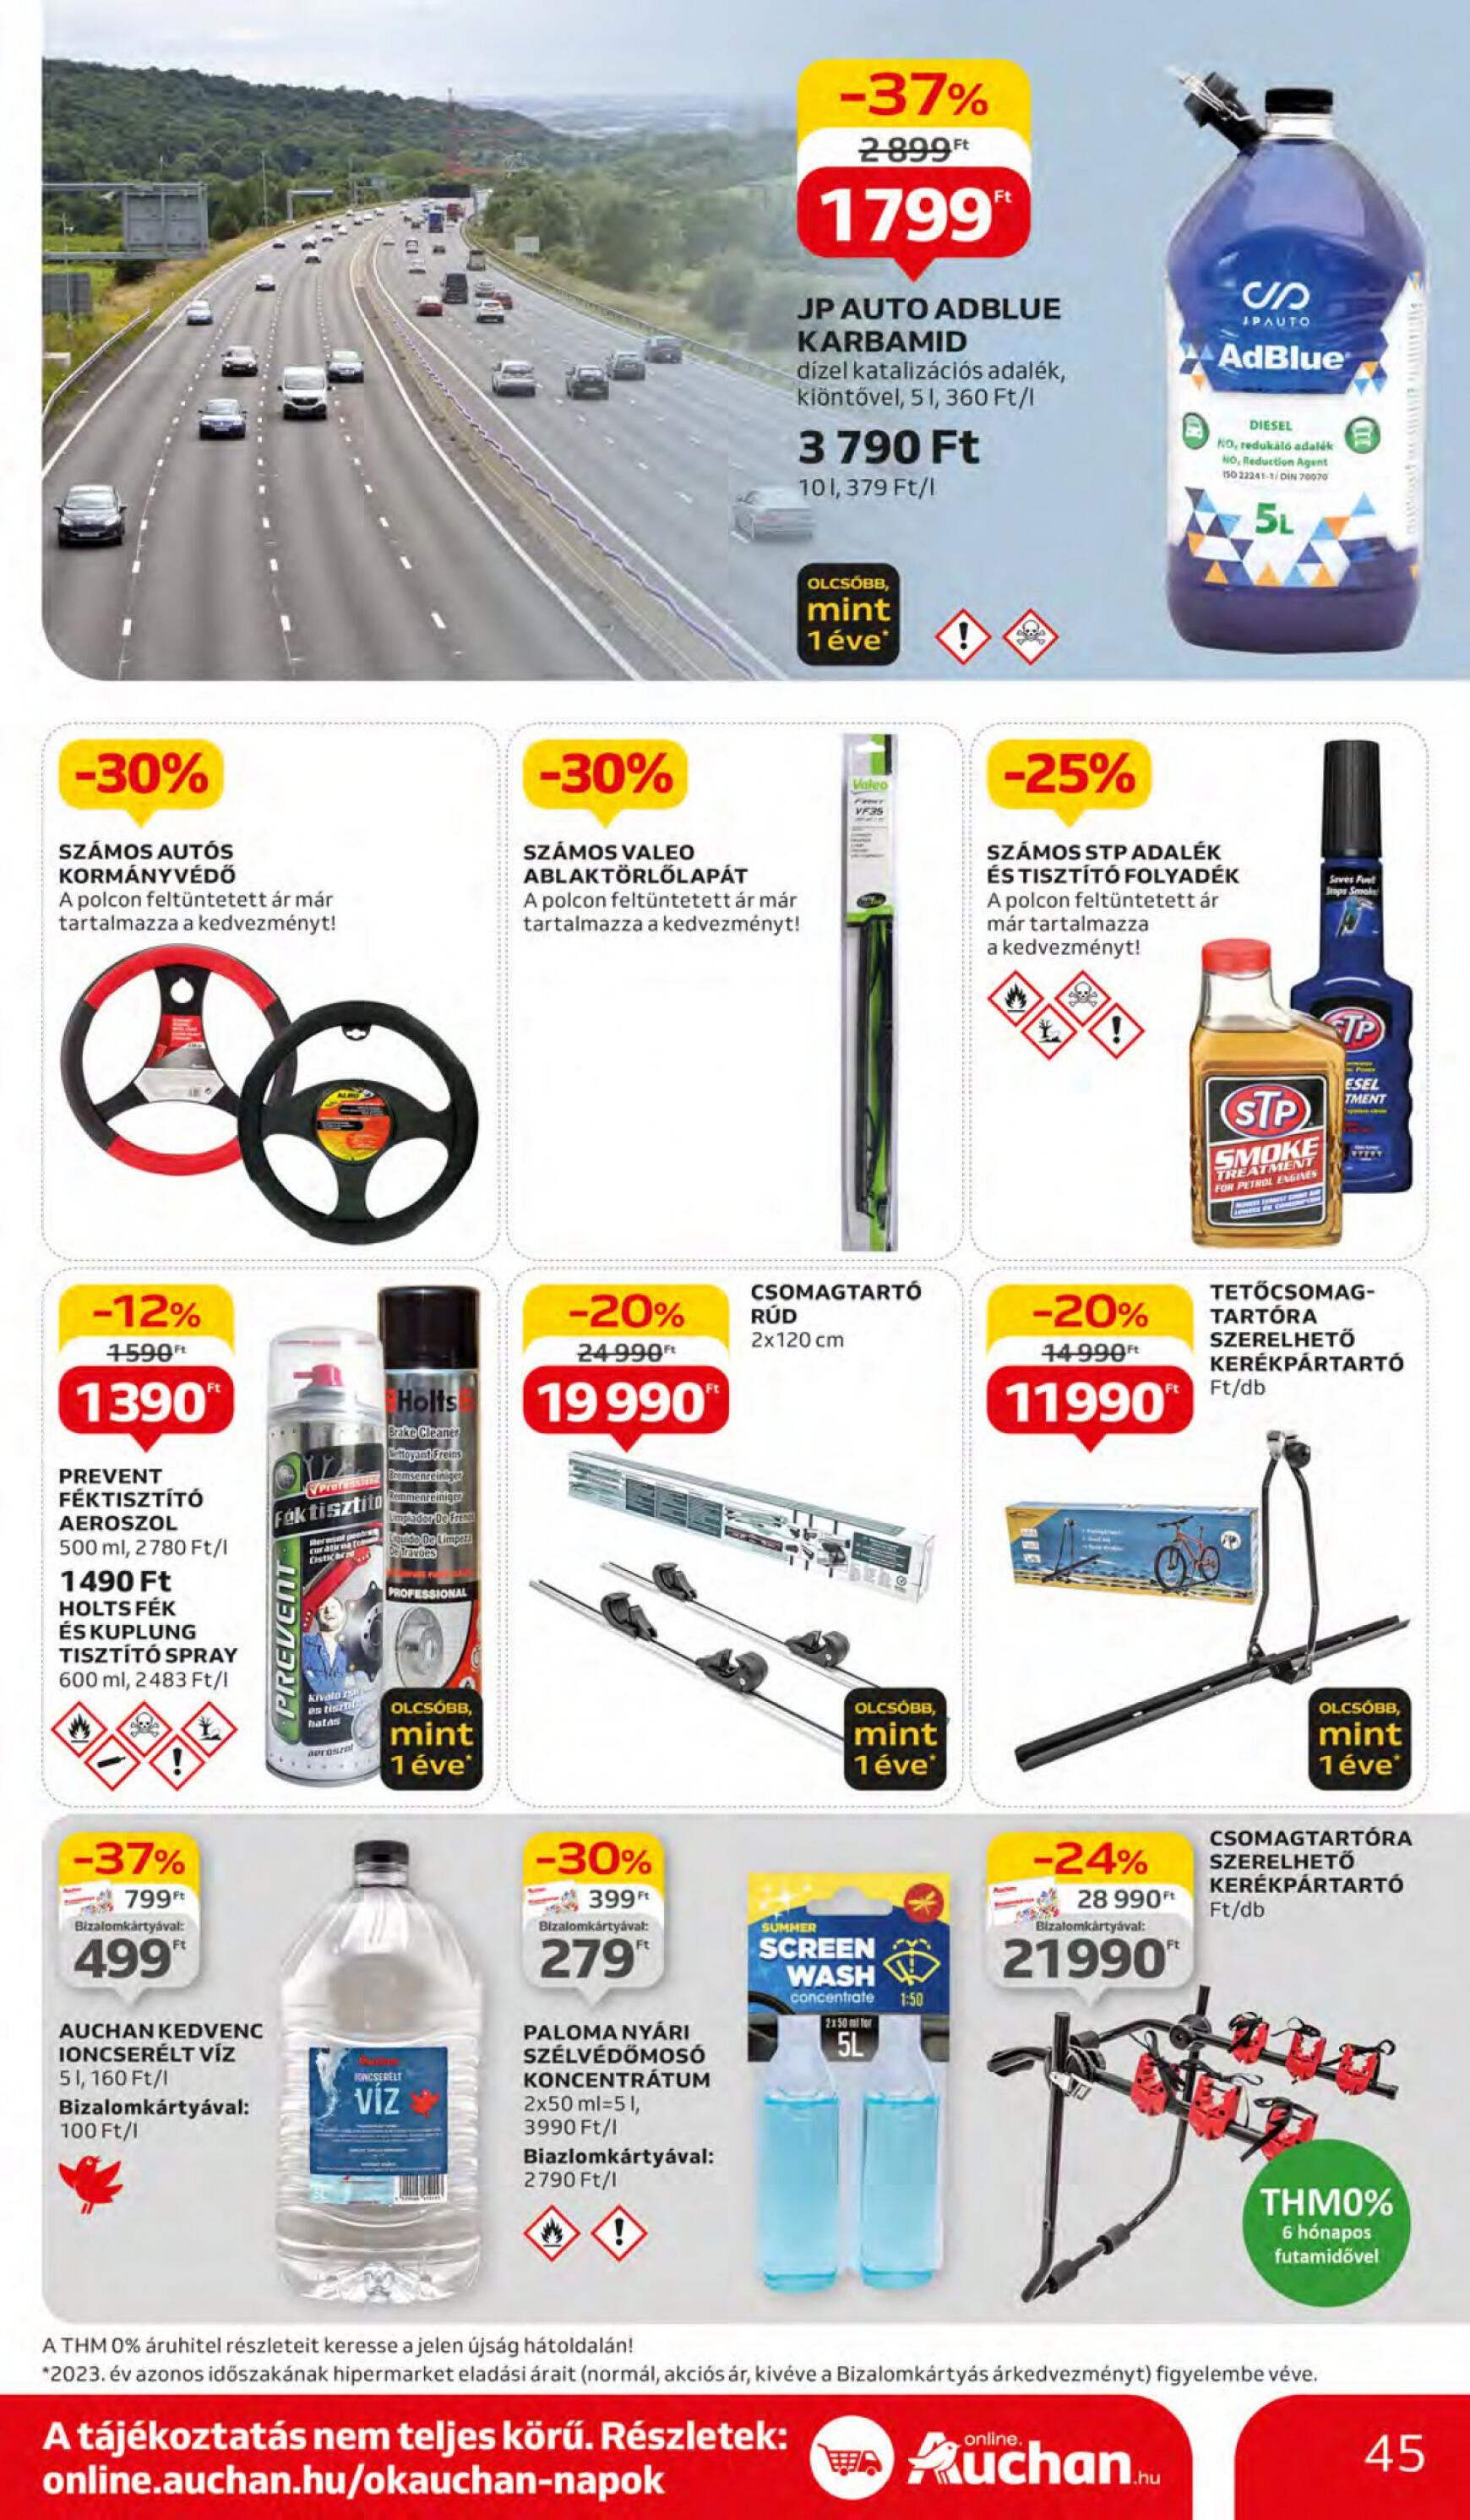 auchan - Aktuális újság Auchan 04.11. - 04.17. - page: 45